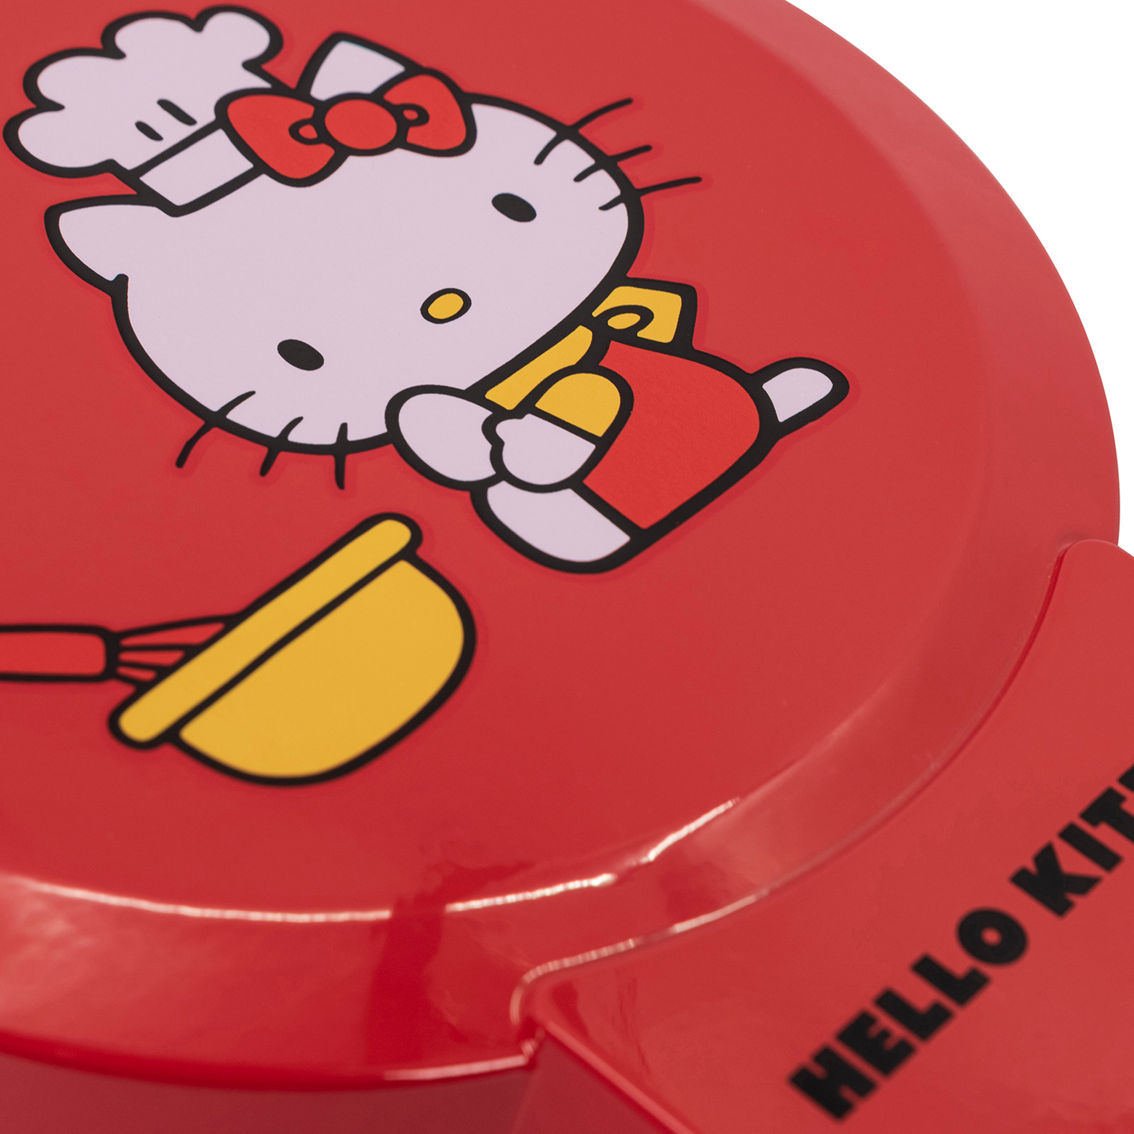 Hello Kitty Red Waffle Maker, Makes Hello Kitty Waffles - Image 3 of 9